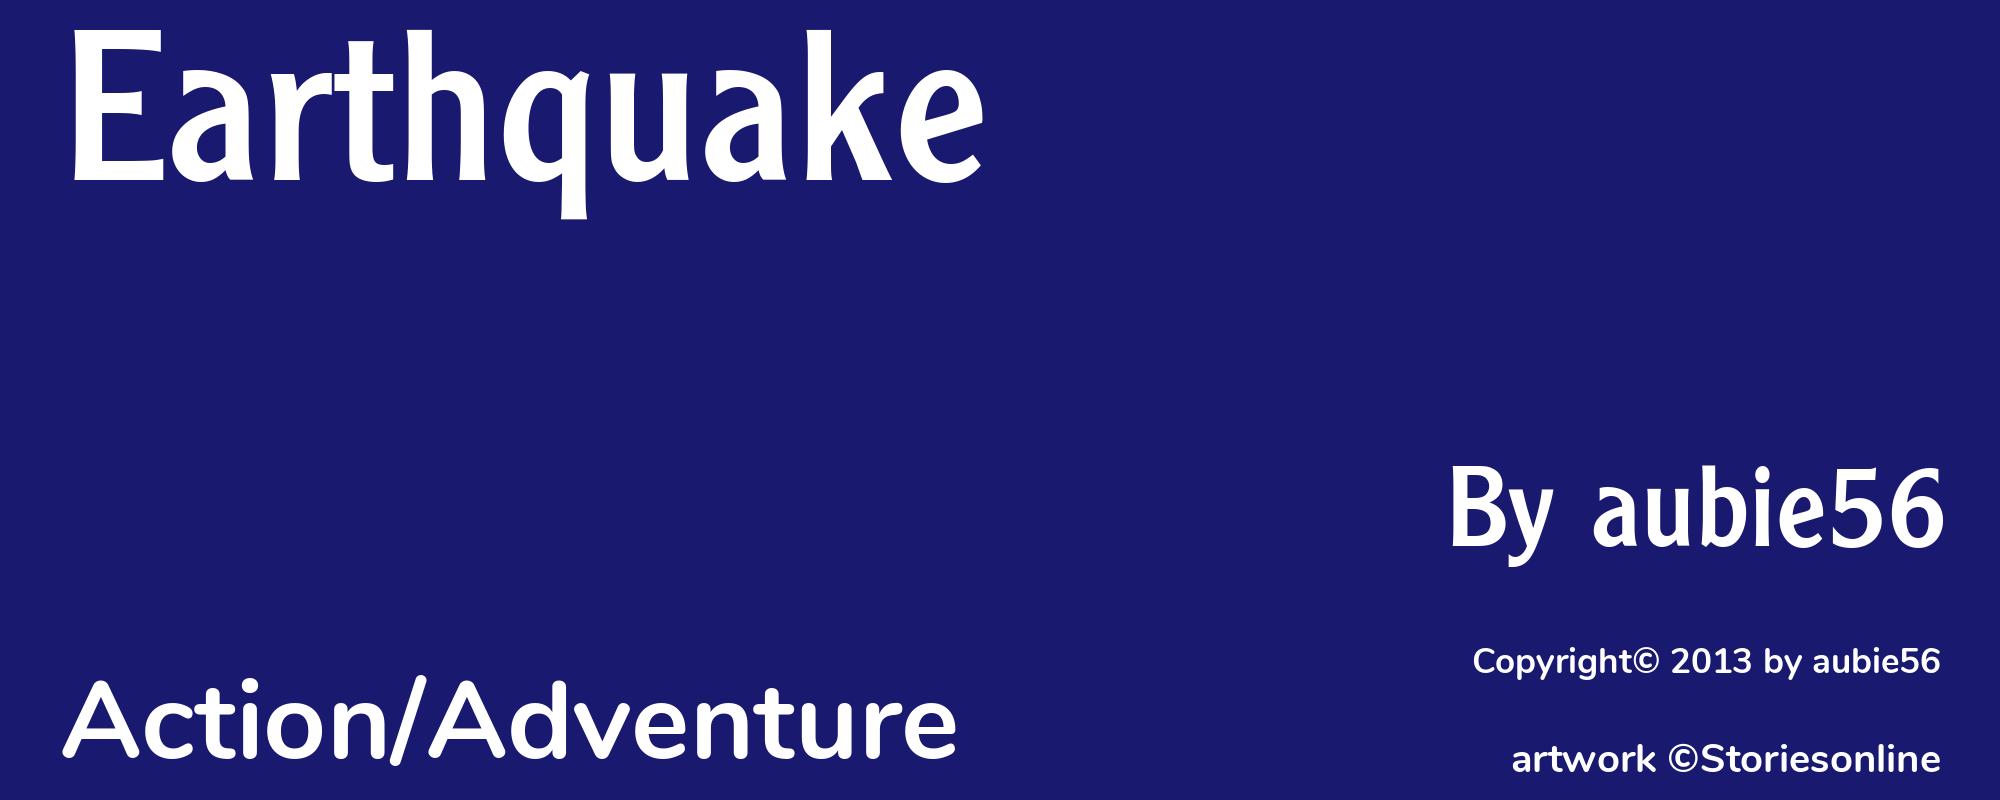 Earthquake - Cover